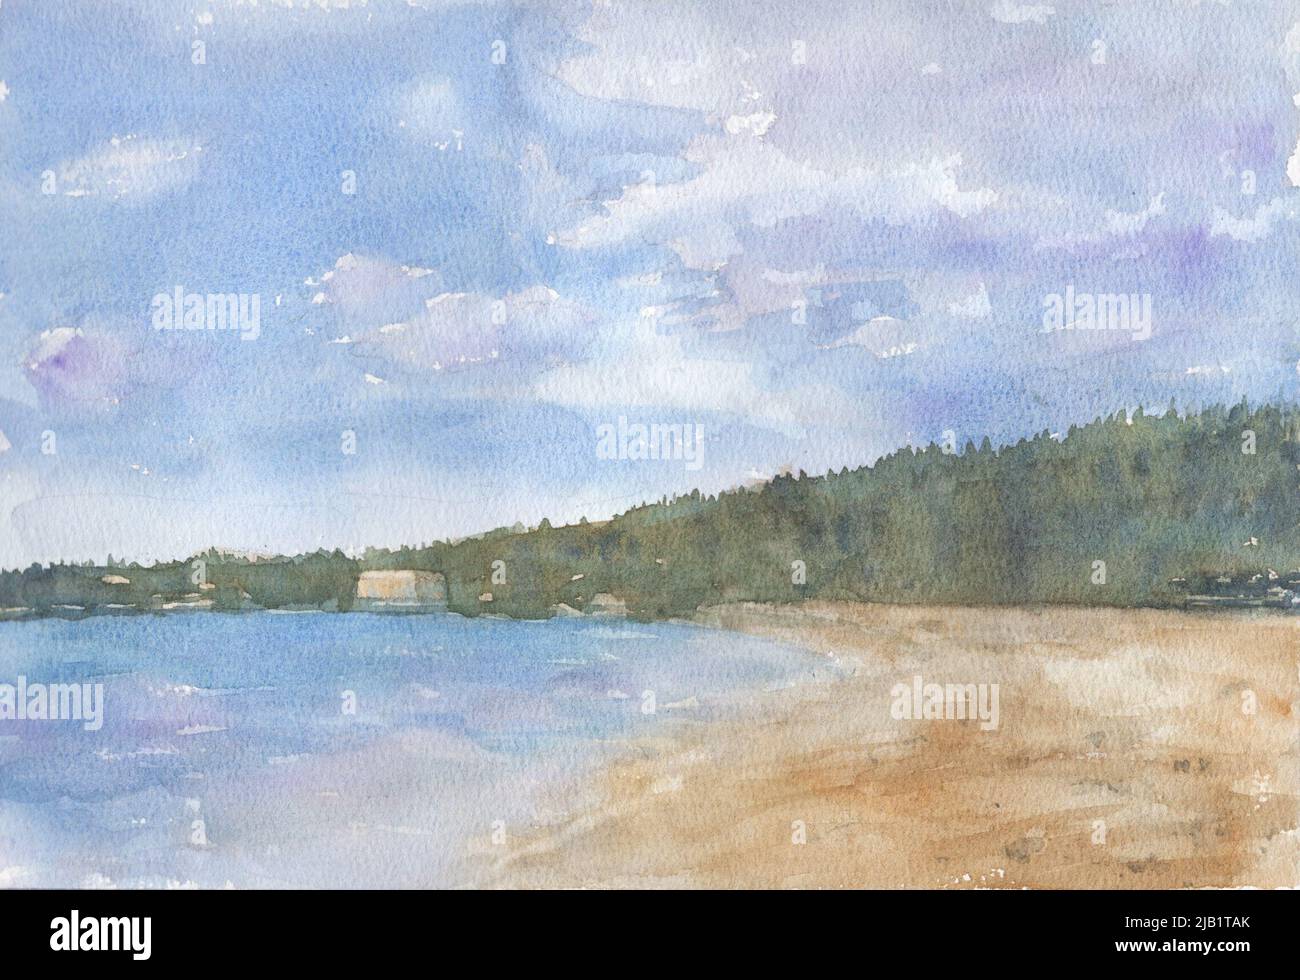 beach landscape watercolor painting art illustration Stock Photo